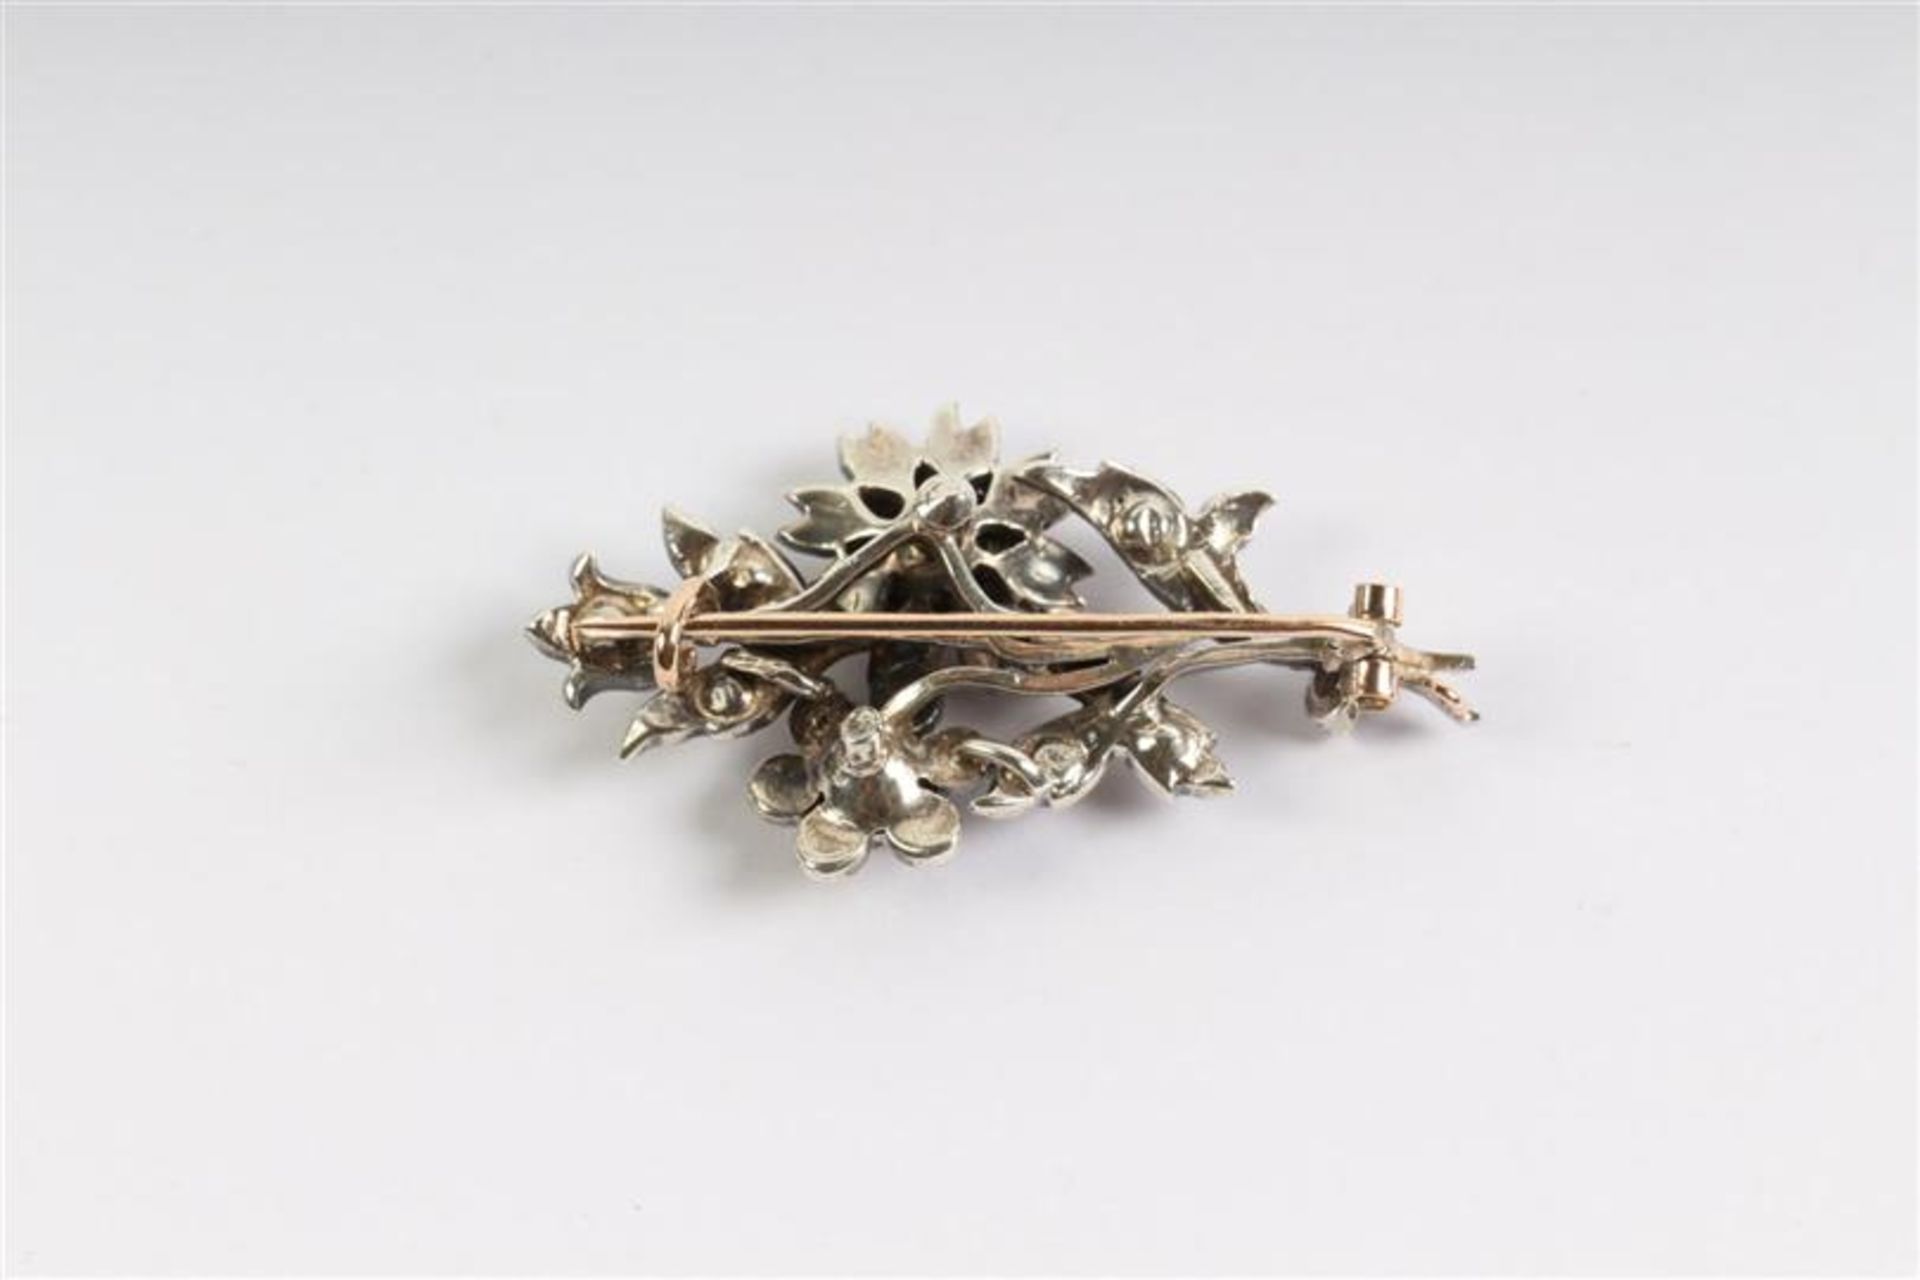 Goud zilveren takbroche met roosdiamant, Hollands gekeurd. Gewicht: 6.6 g. - Bild 3 aus 3